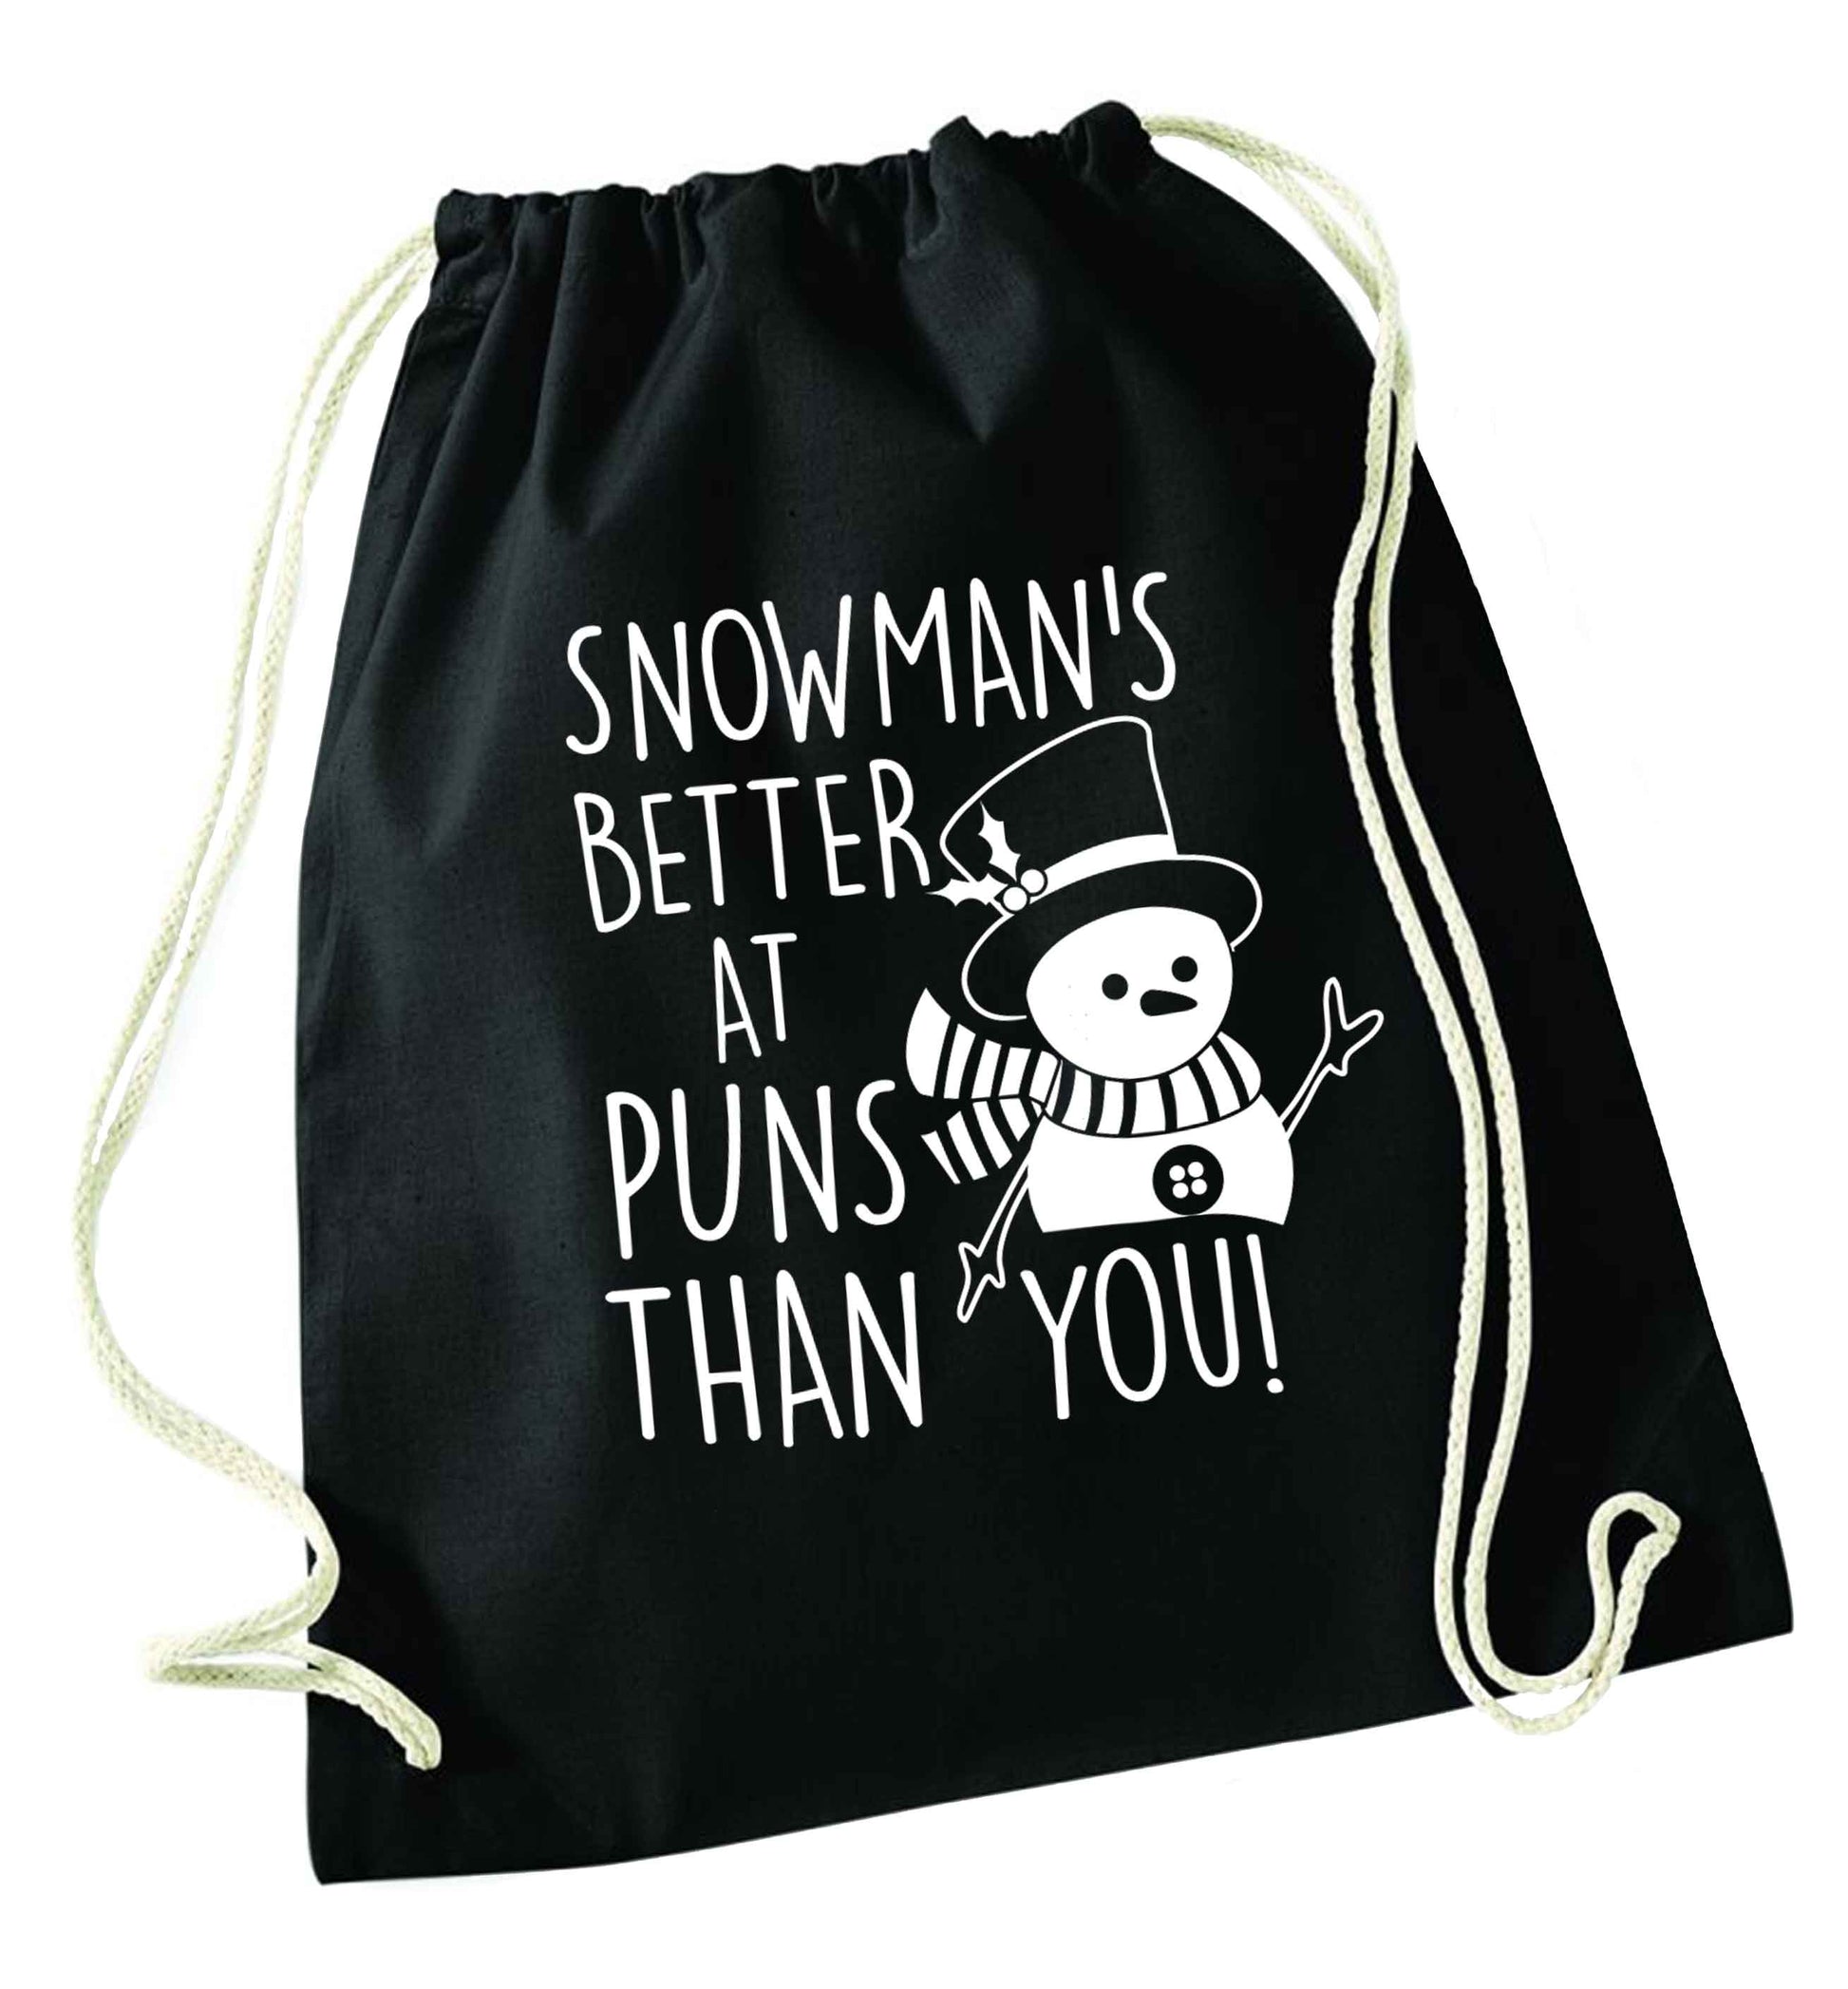 Snowman's Puns You black drawstring bag